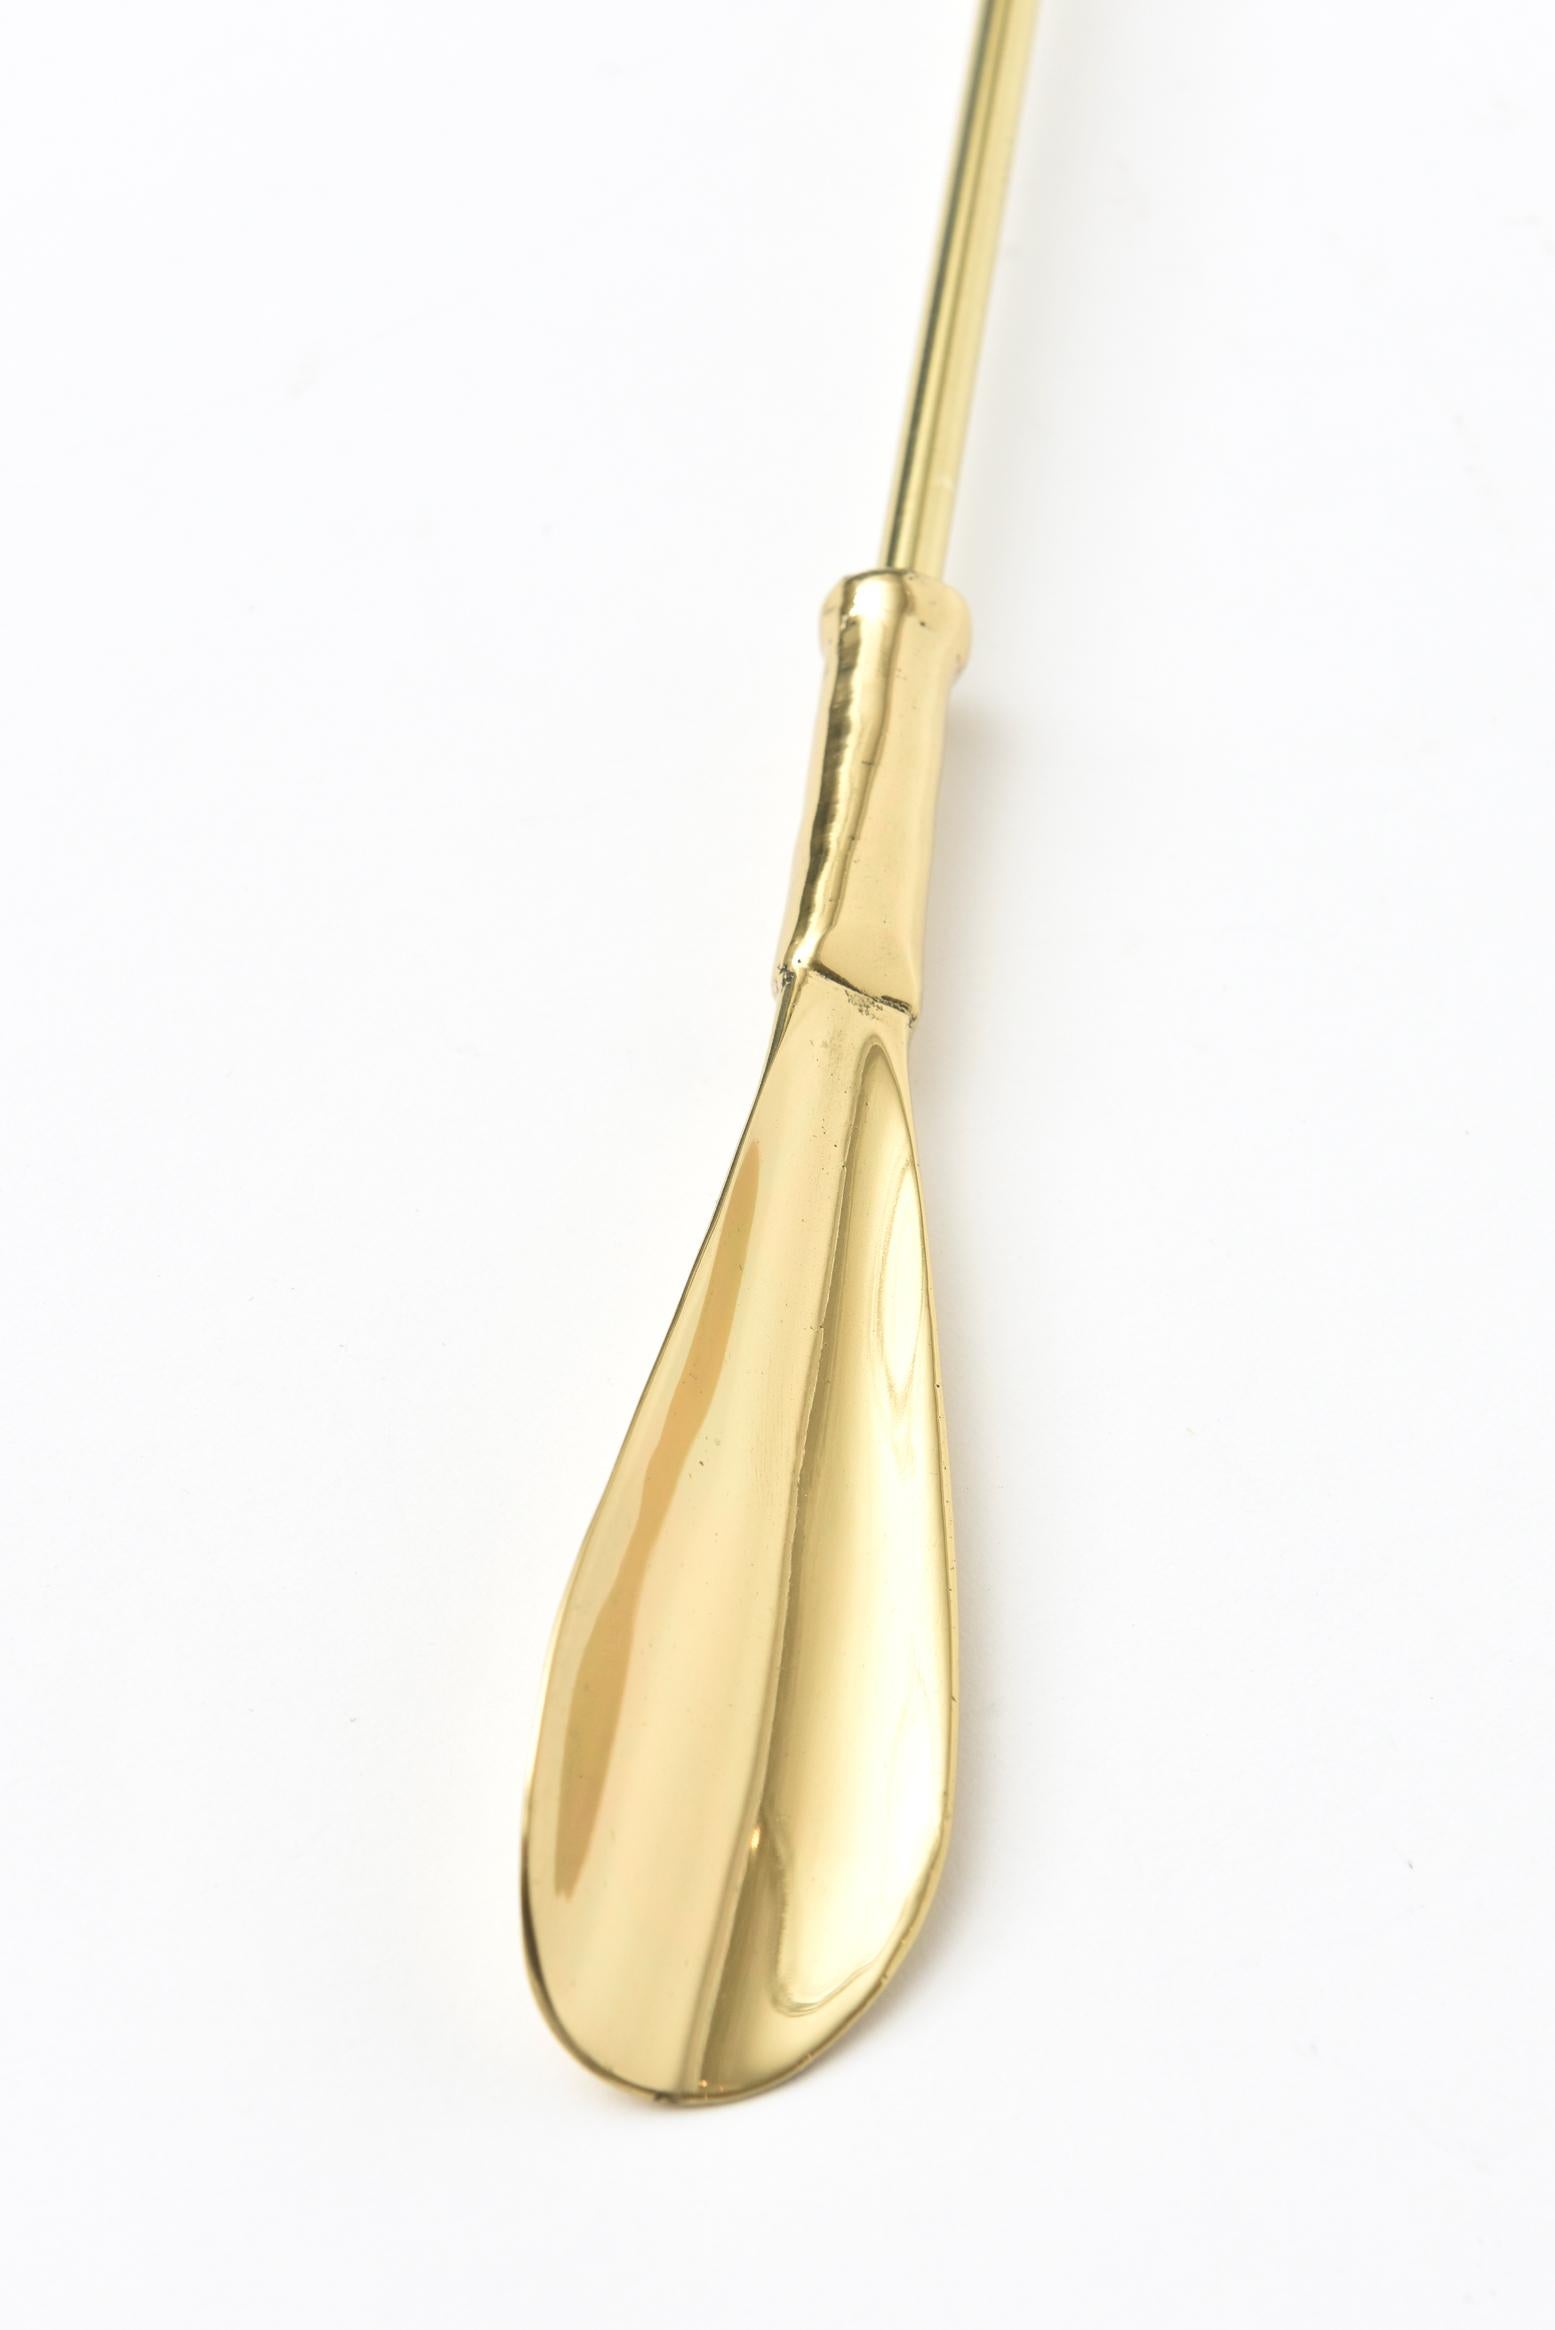  Brass Shoe Horn With Hand Back Scratcher Mid Century Modern 1